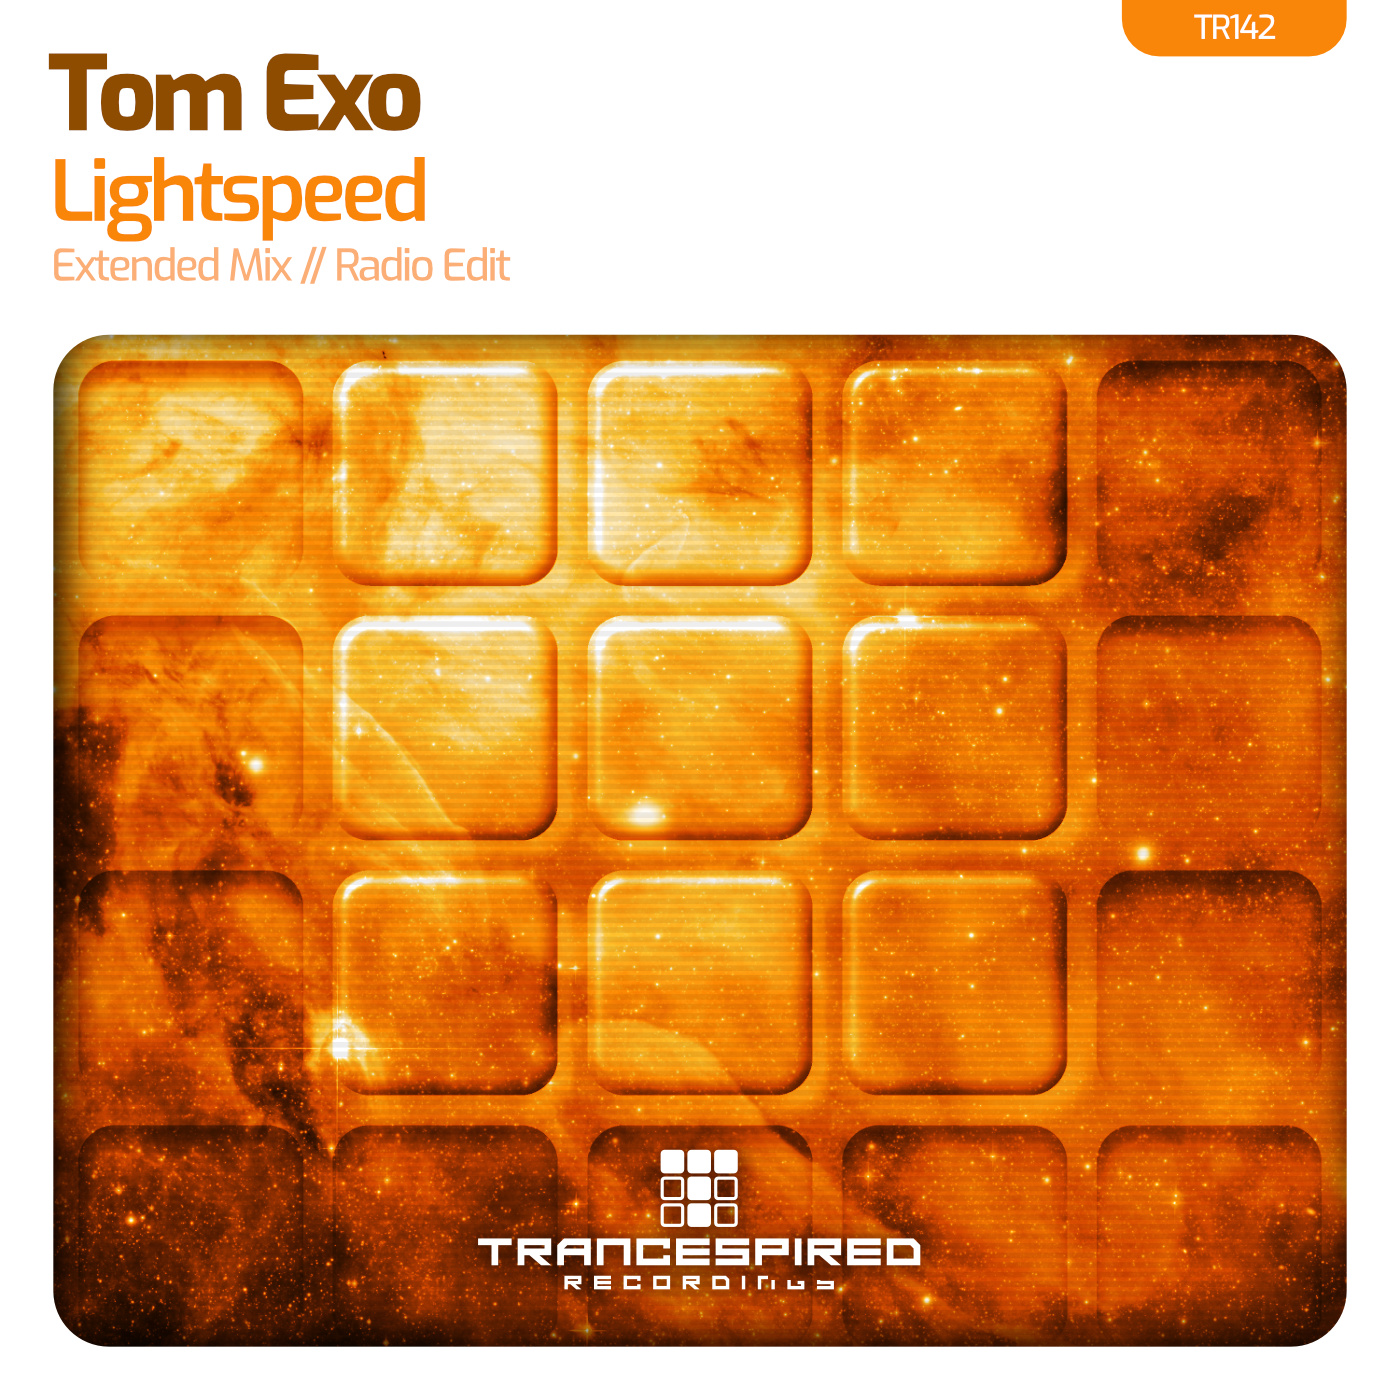 Tom Exo presents Lightspeed on Trancespired Recordings